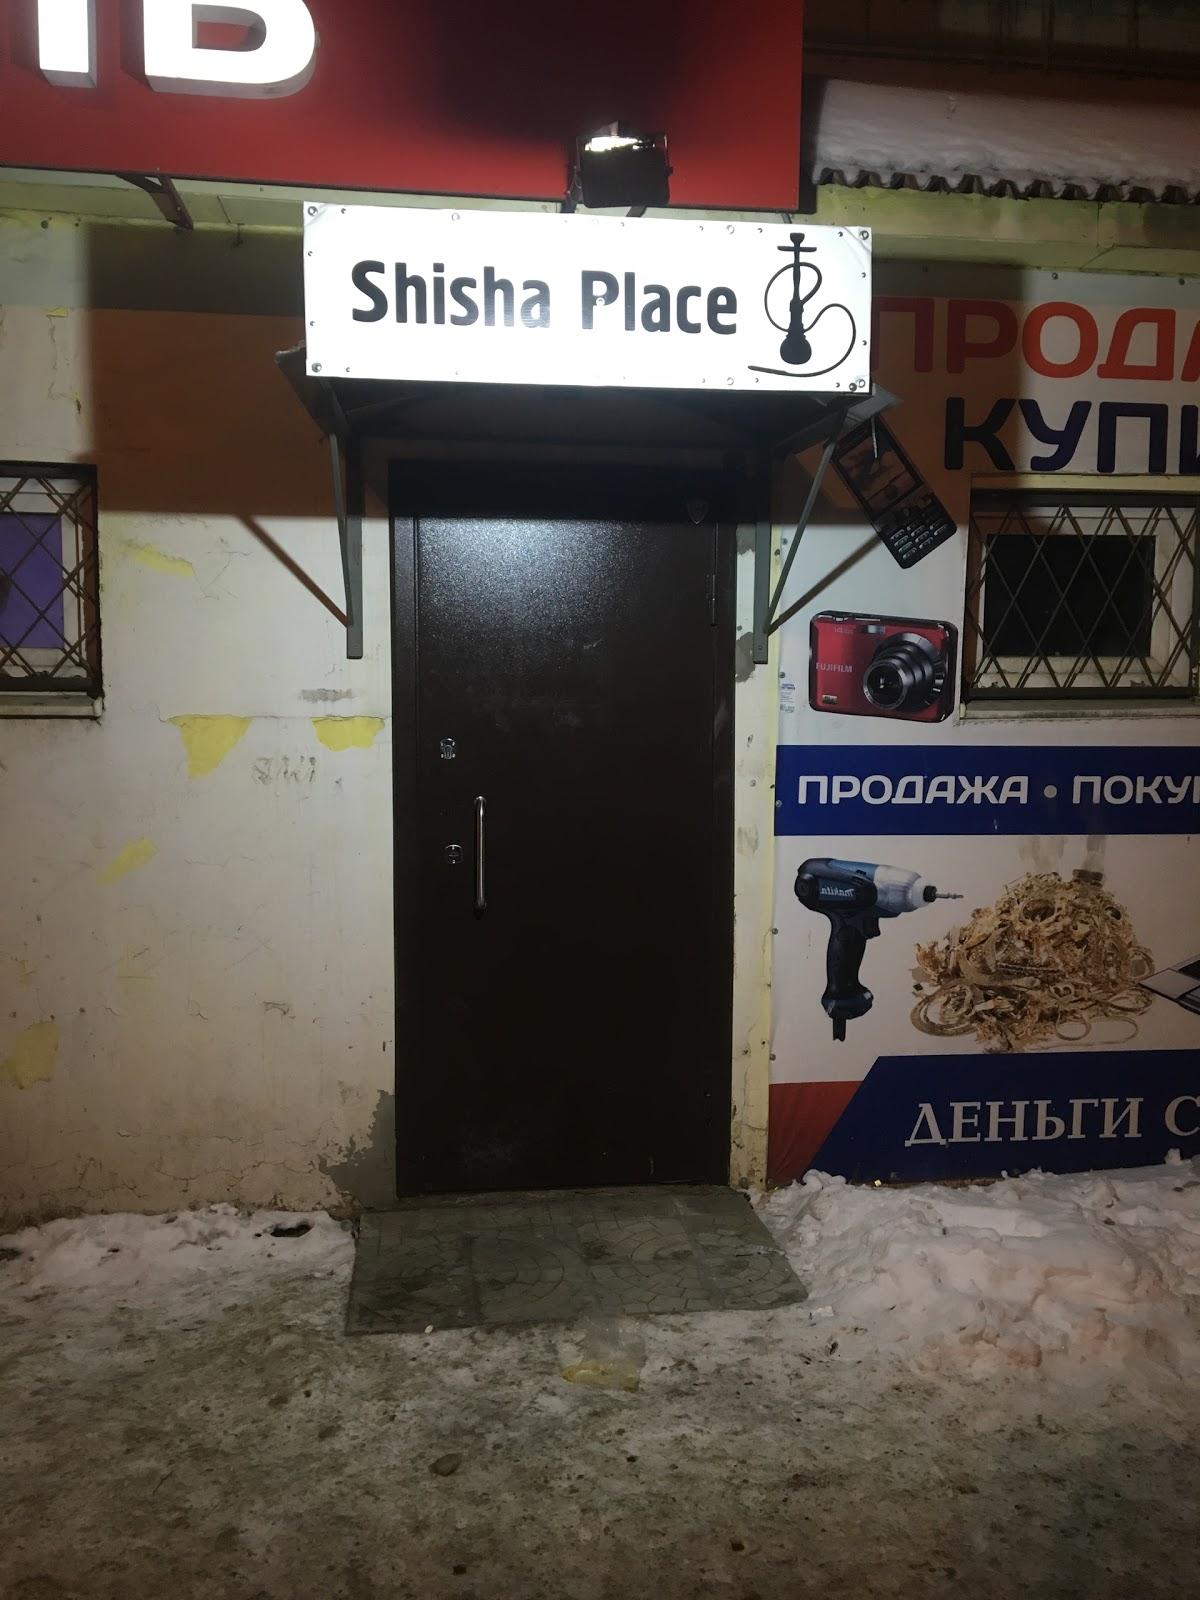 Shisha Place